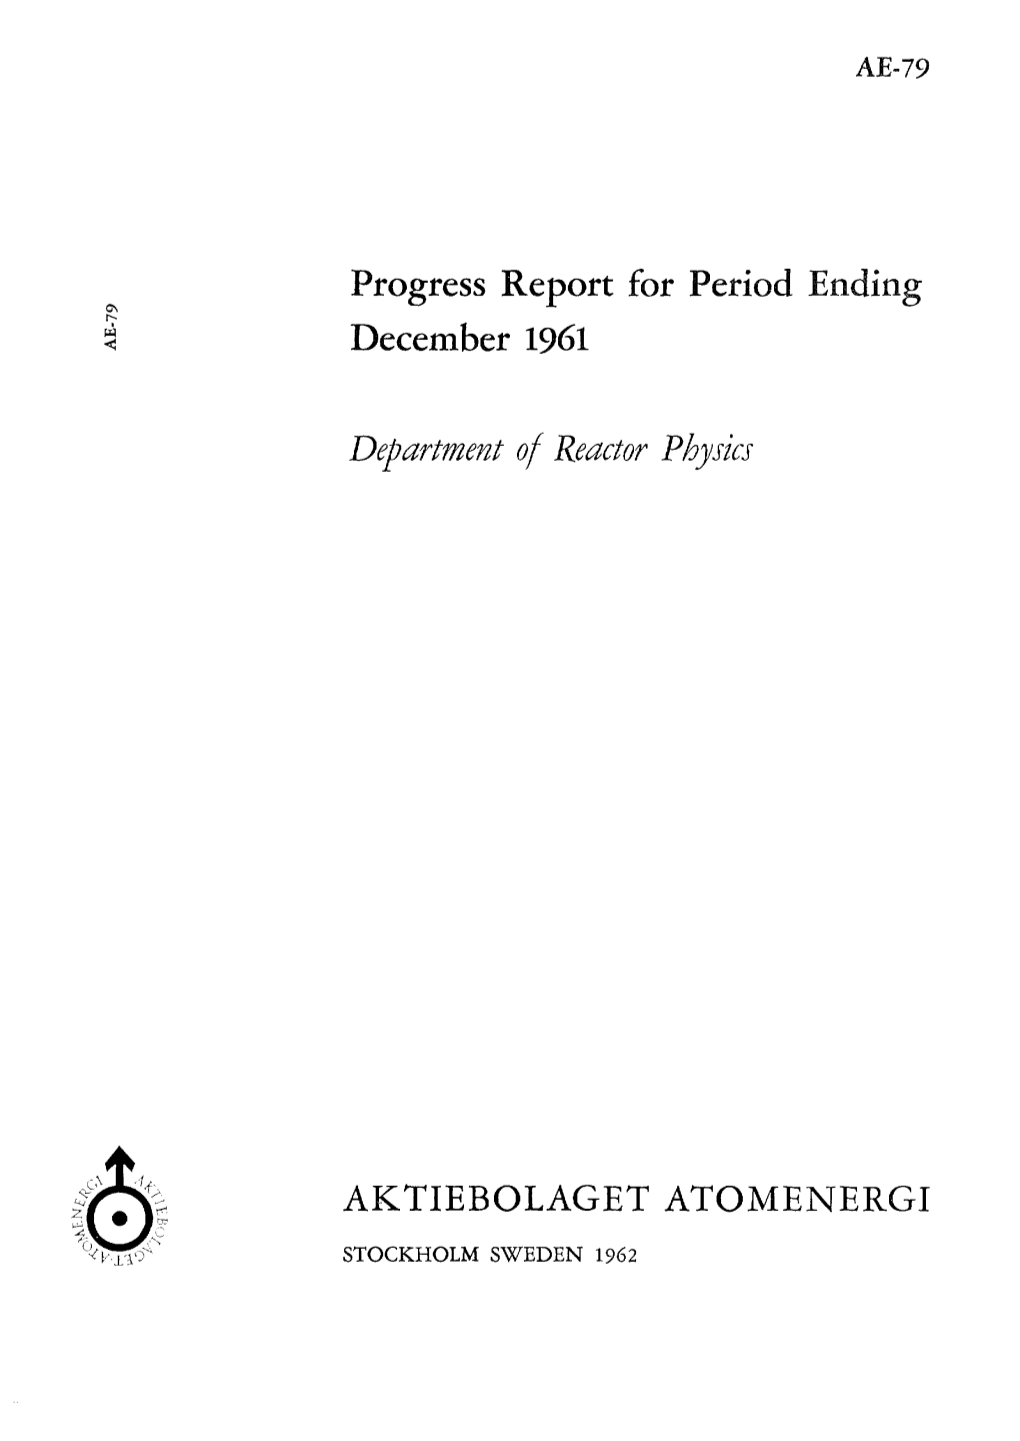 Progress Report for Period Ending December 1961 Department of Reactor Physics AKTIEBOLAGET ATOMENERGI